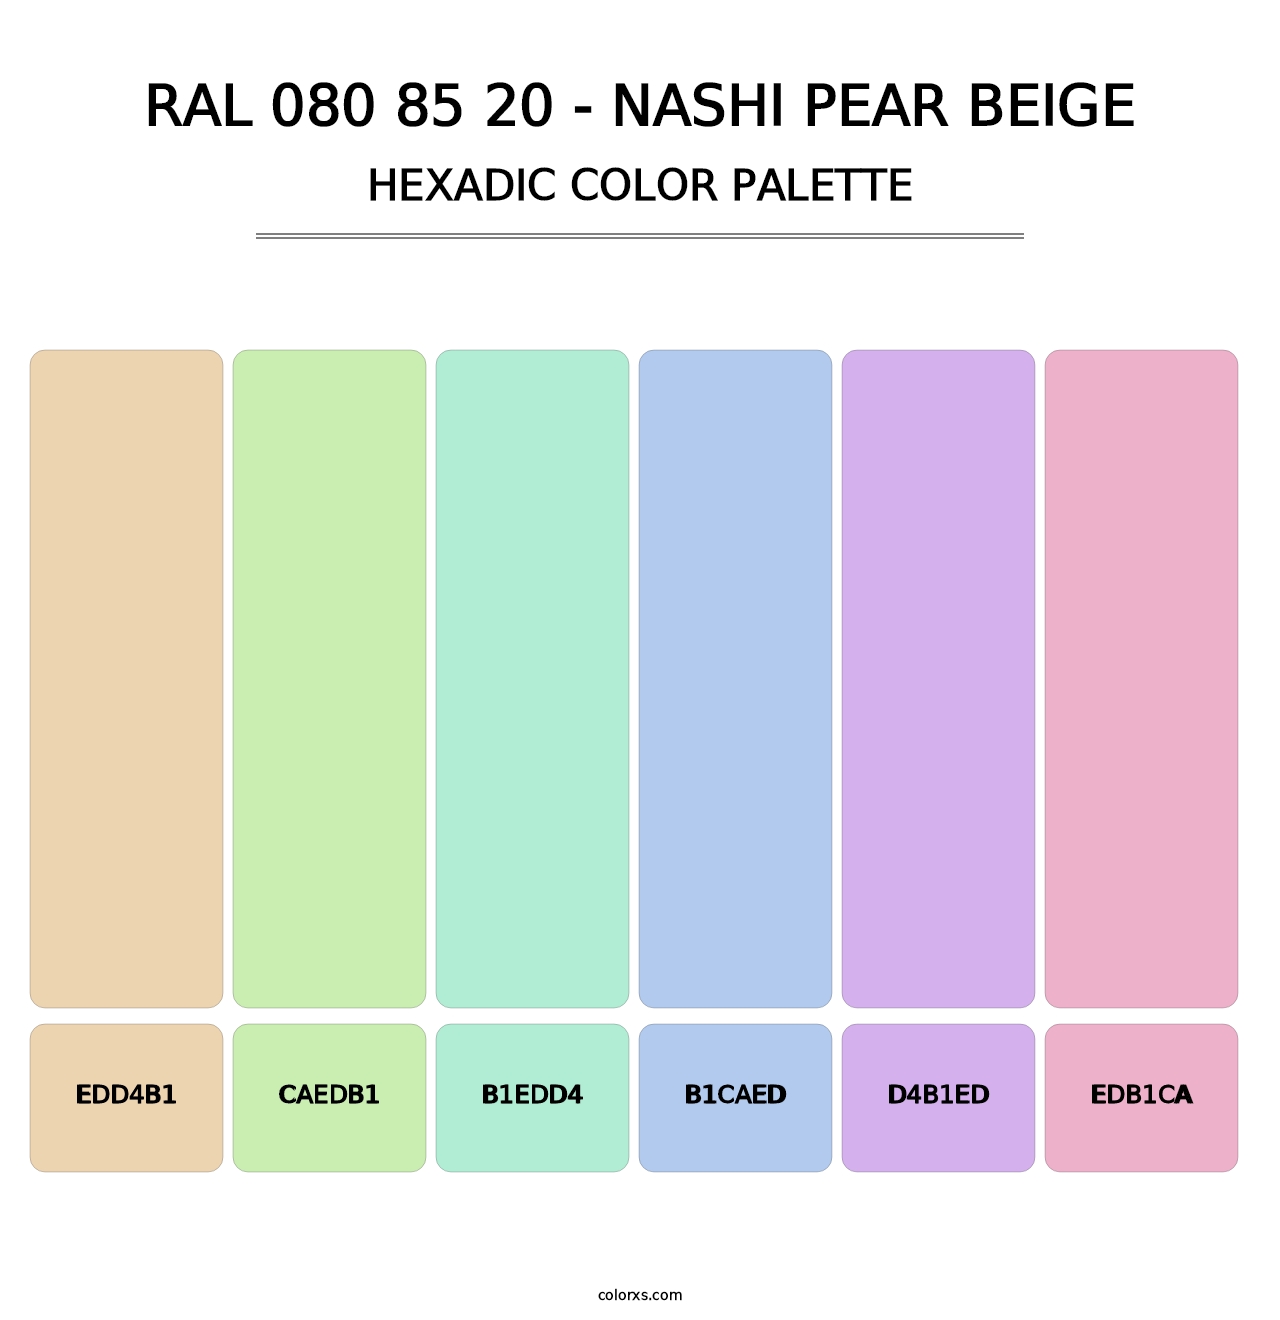 RAL 080 85 20 - Nashi Pear Beige - Hexadic Color Palette